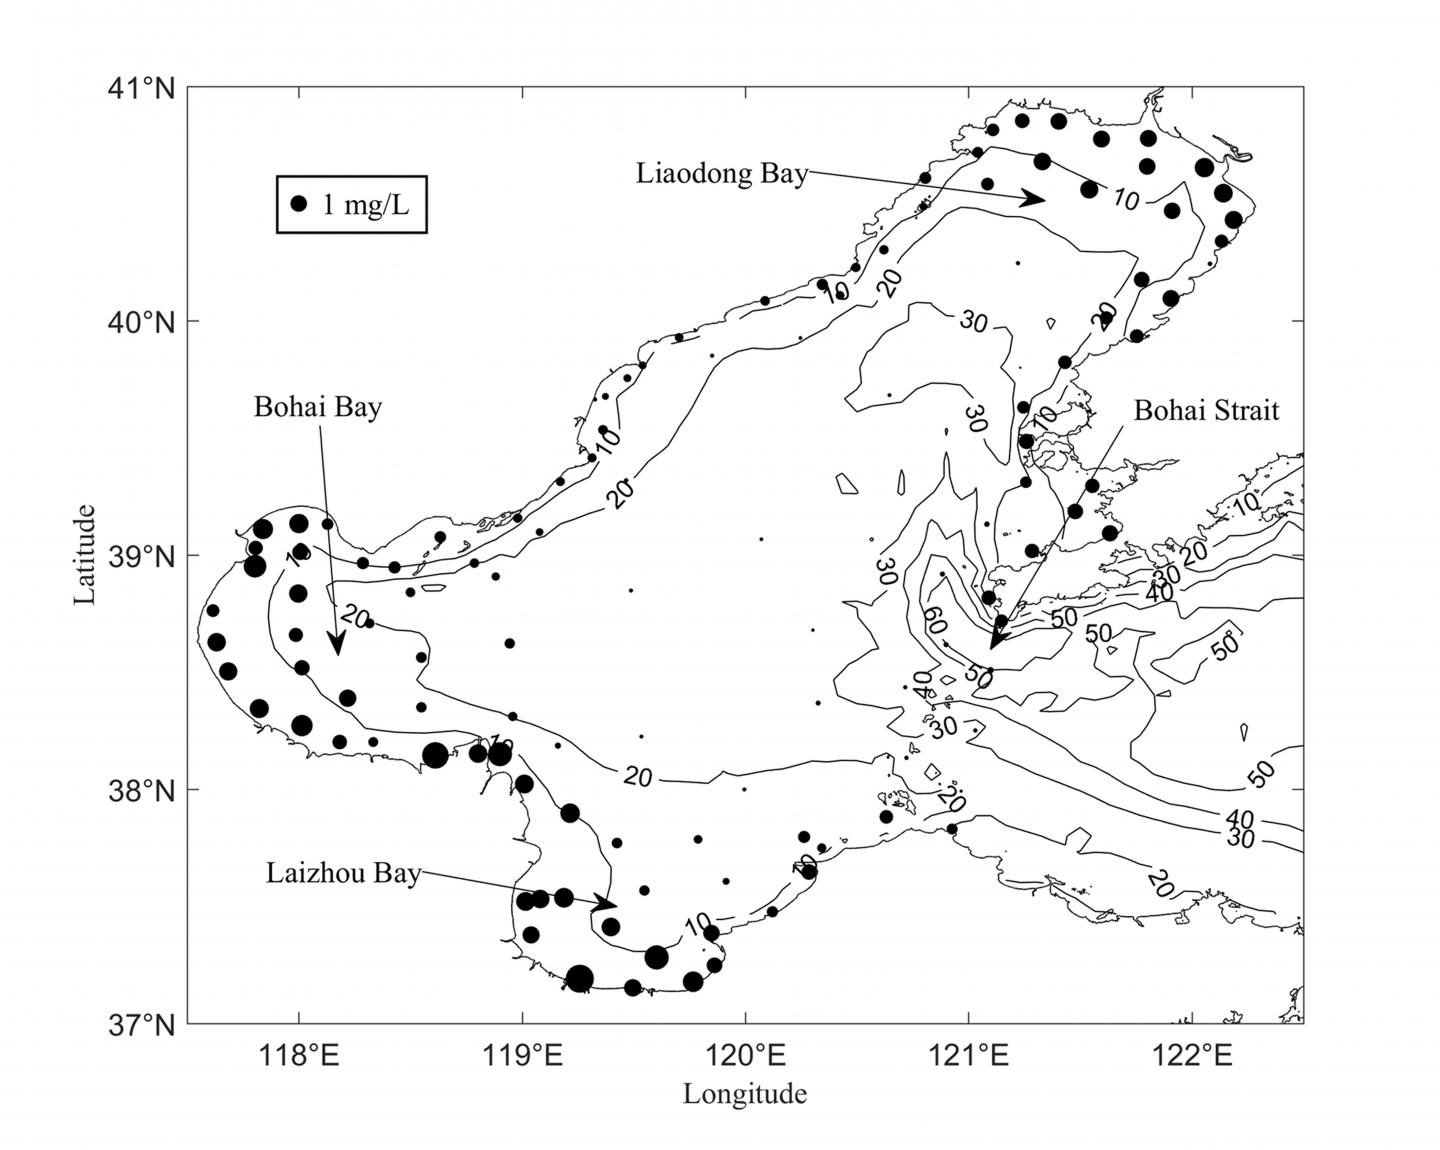 Figure 1. Topography of the Bohai Sea 